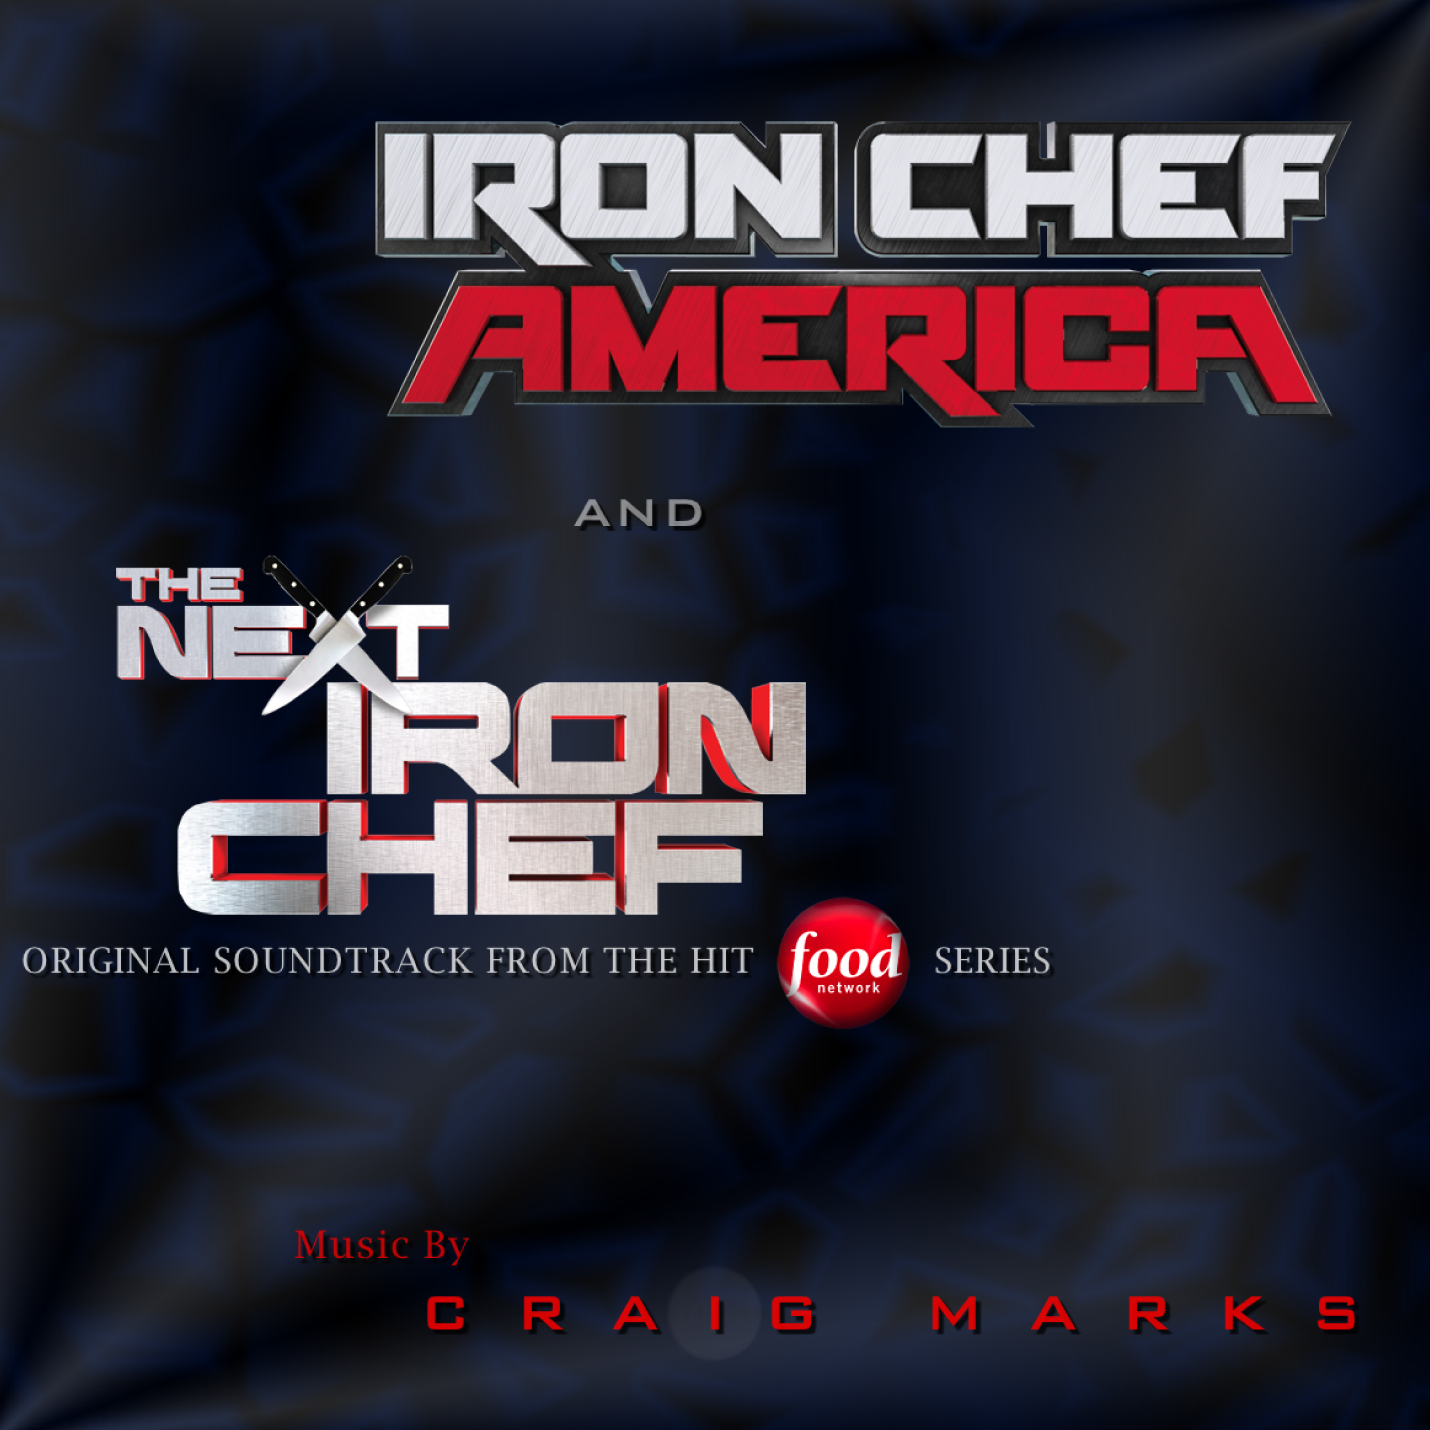 Iron Chef Cyber Planet игра 2006 музыка. Шеф саундтреки